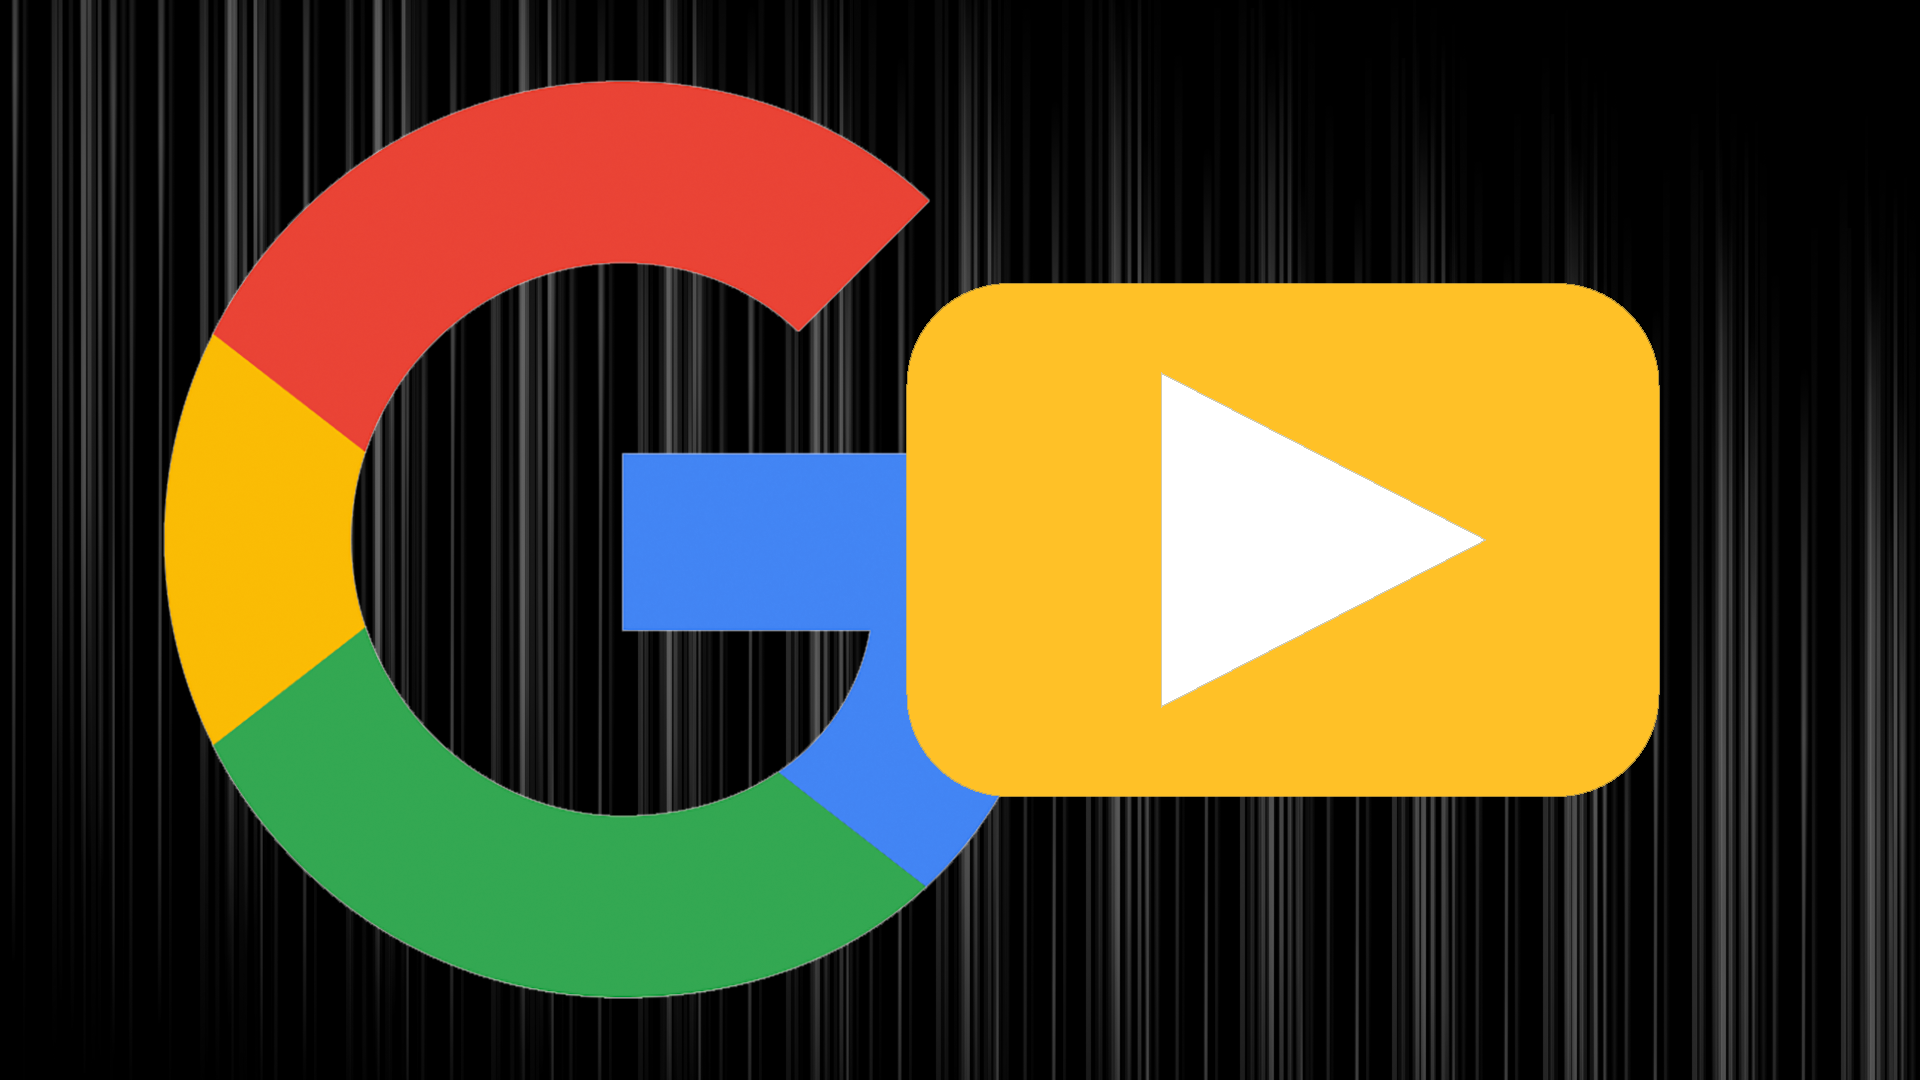 Google no longer requires video descriptions as part of structured data